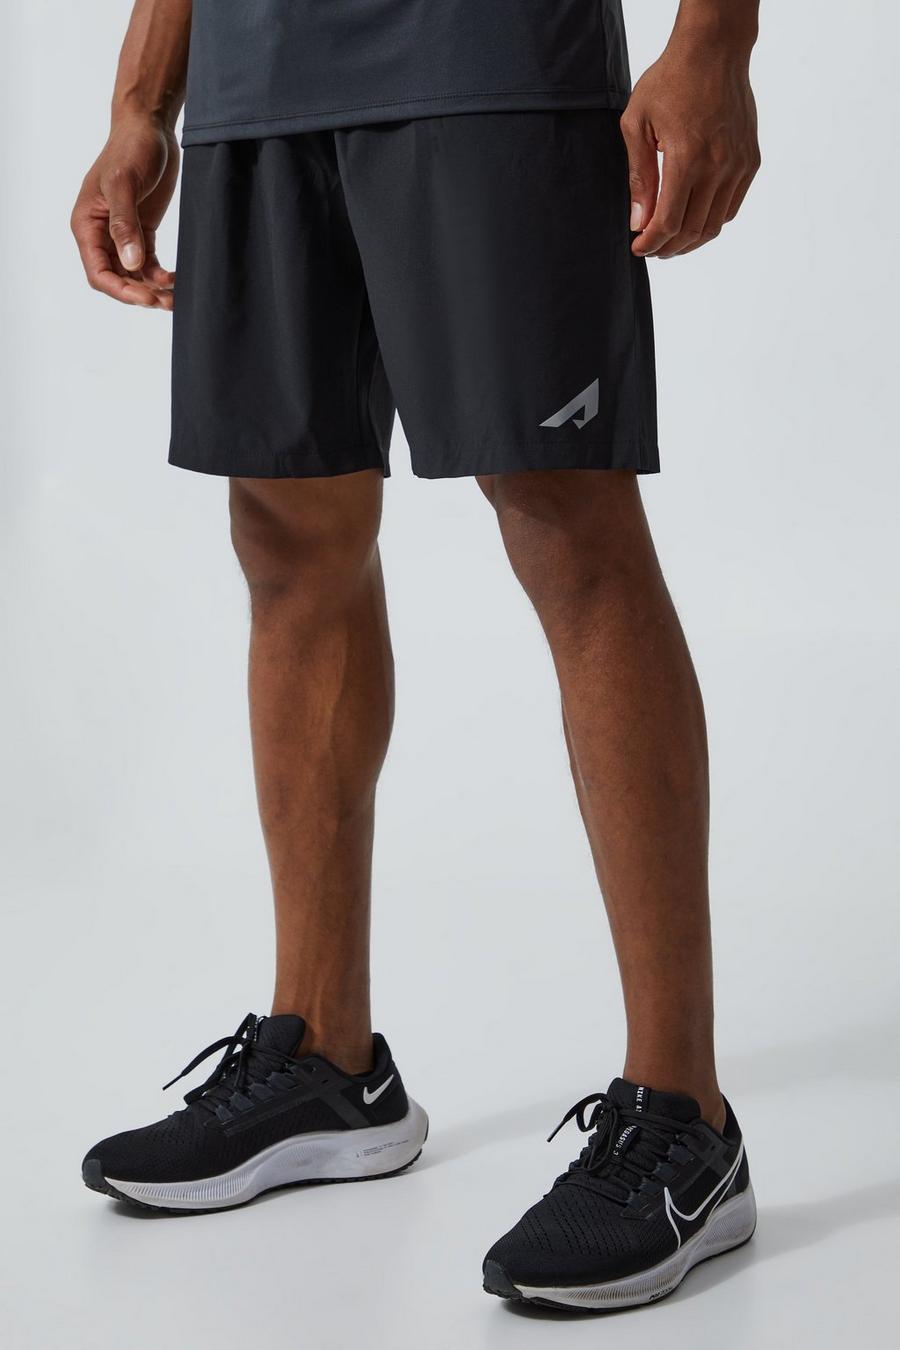 Active schnelltrocknende 18cm Shorts, Black